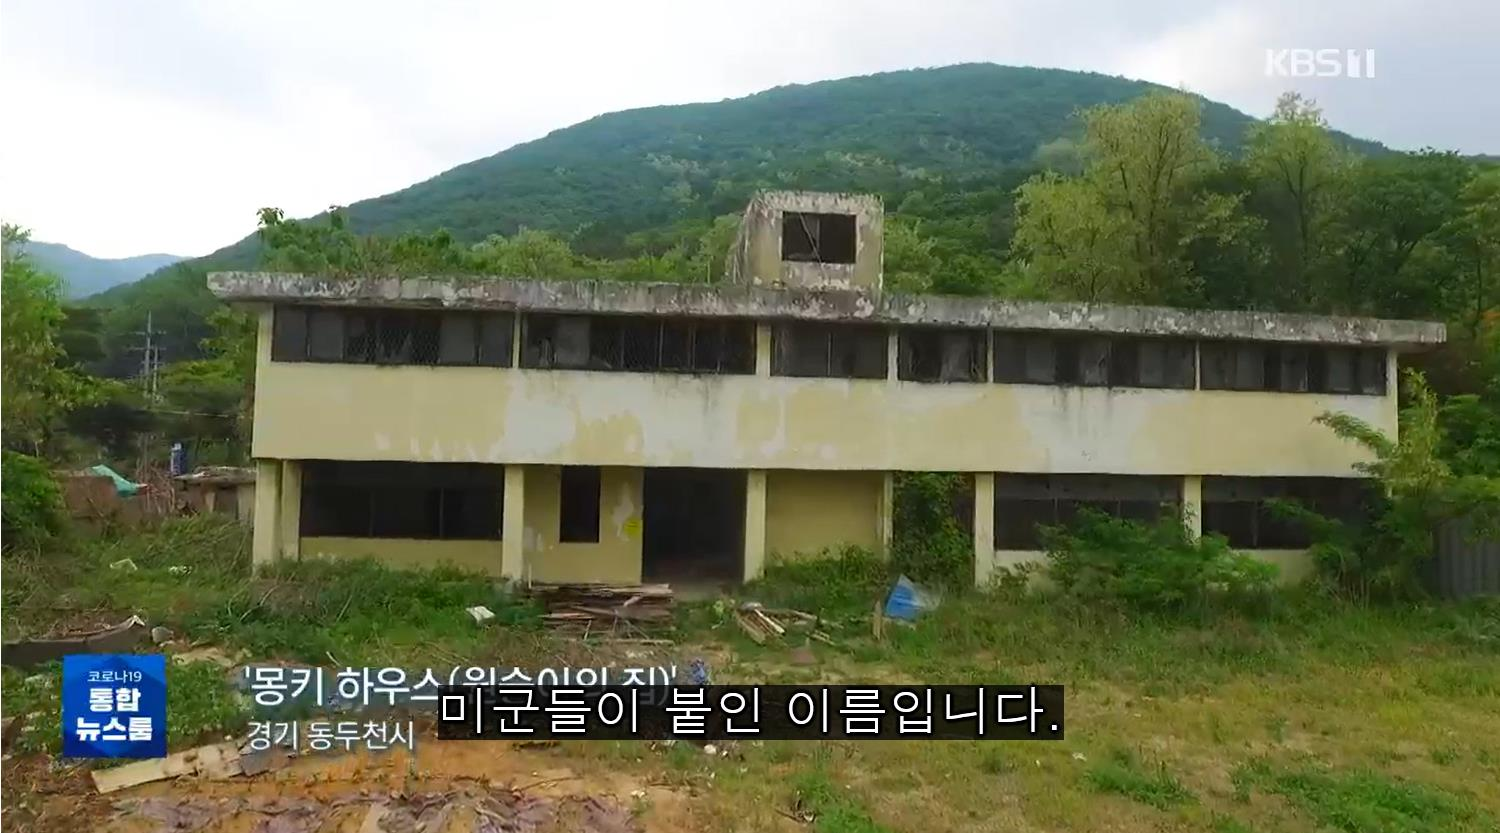 KBS报道截图：驻韩美军将“基地村”内提供性服务的场所称为“猴子屋”。